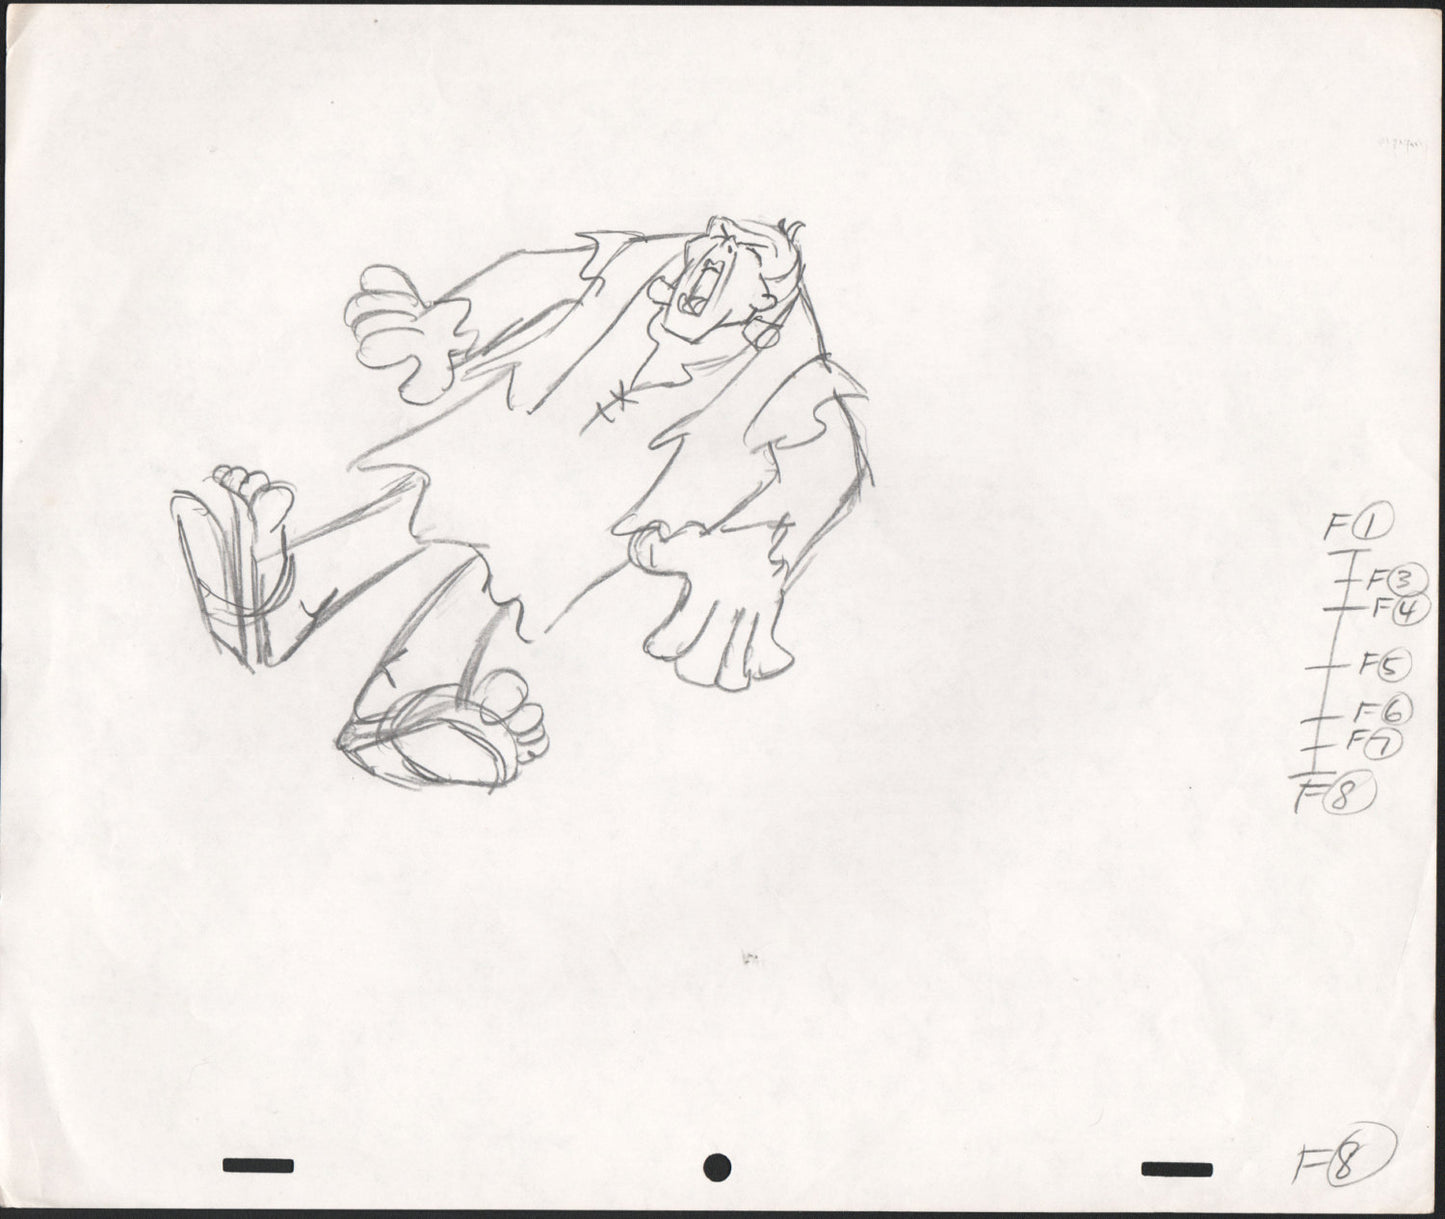 1979 FRANKENSTONE Original Production KEY Drawing from The Flintstones Meet Rockula and Frankenstone